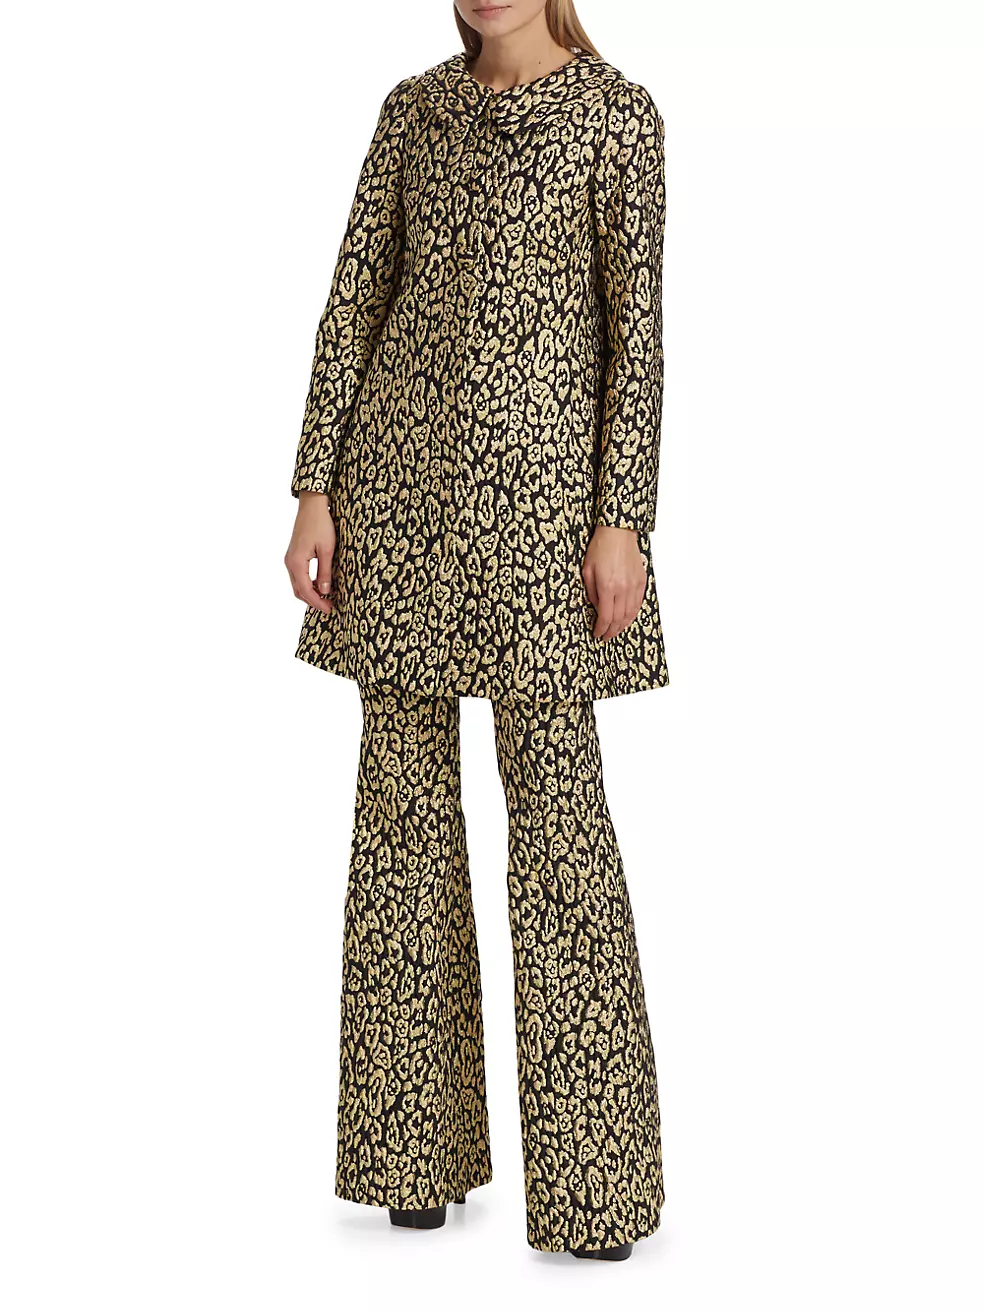 Shop Carolina Herrera Leopard Jacquard Flare Pants | Saks Fifth Avenue